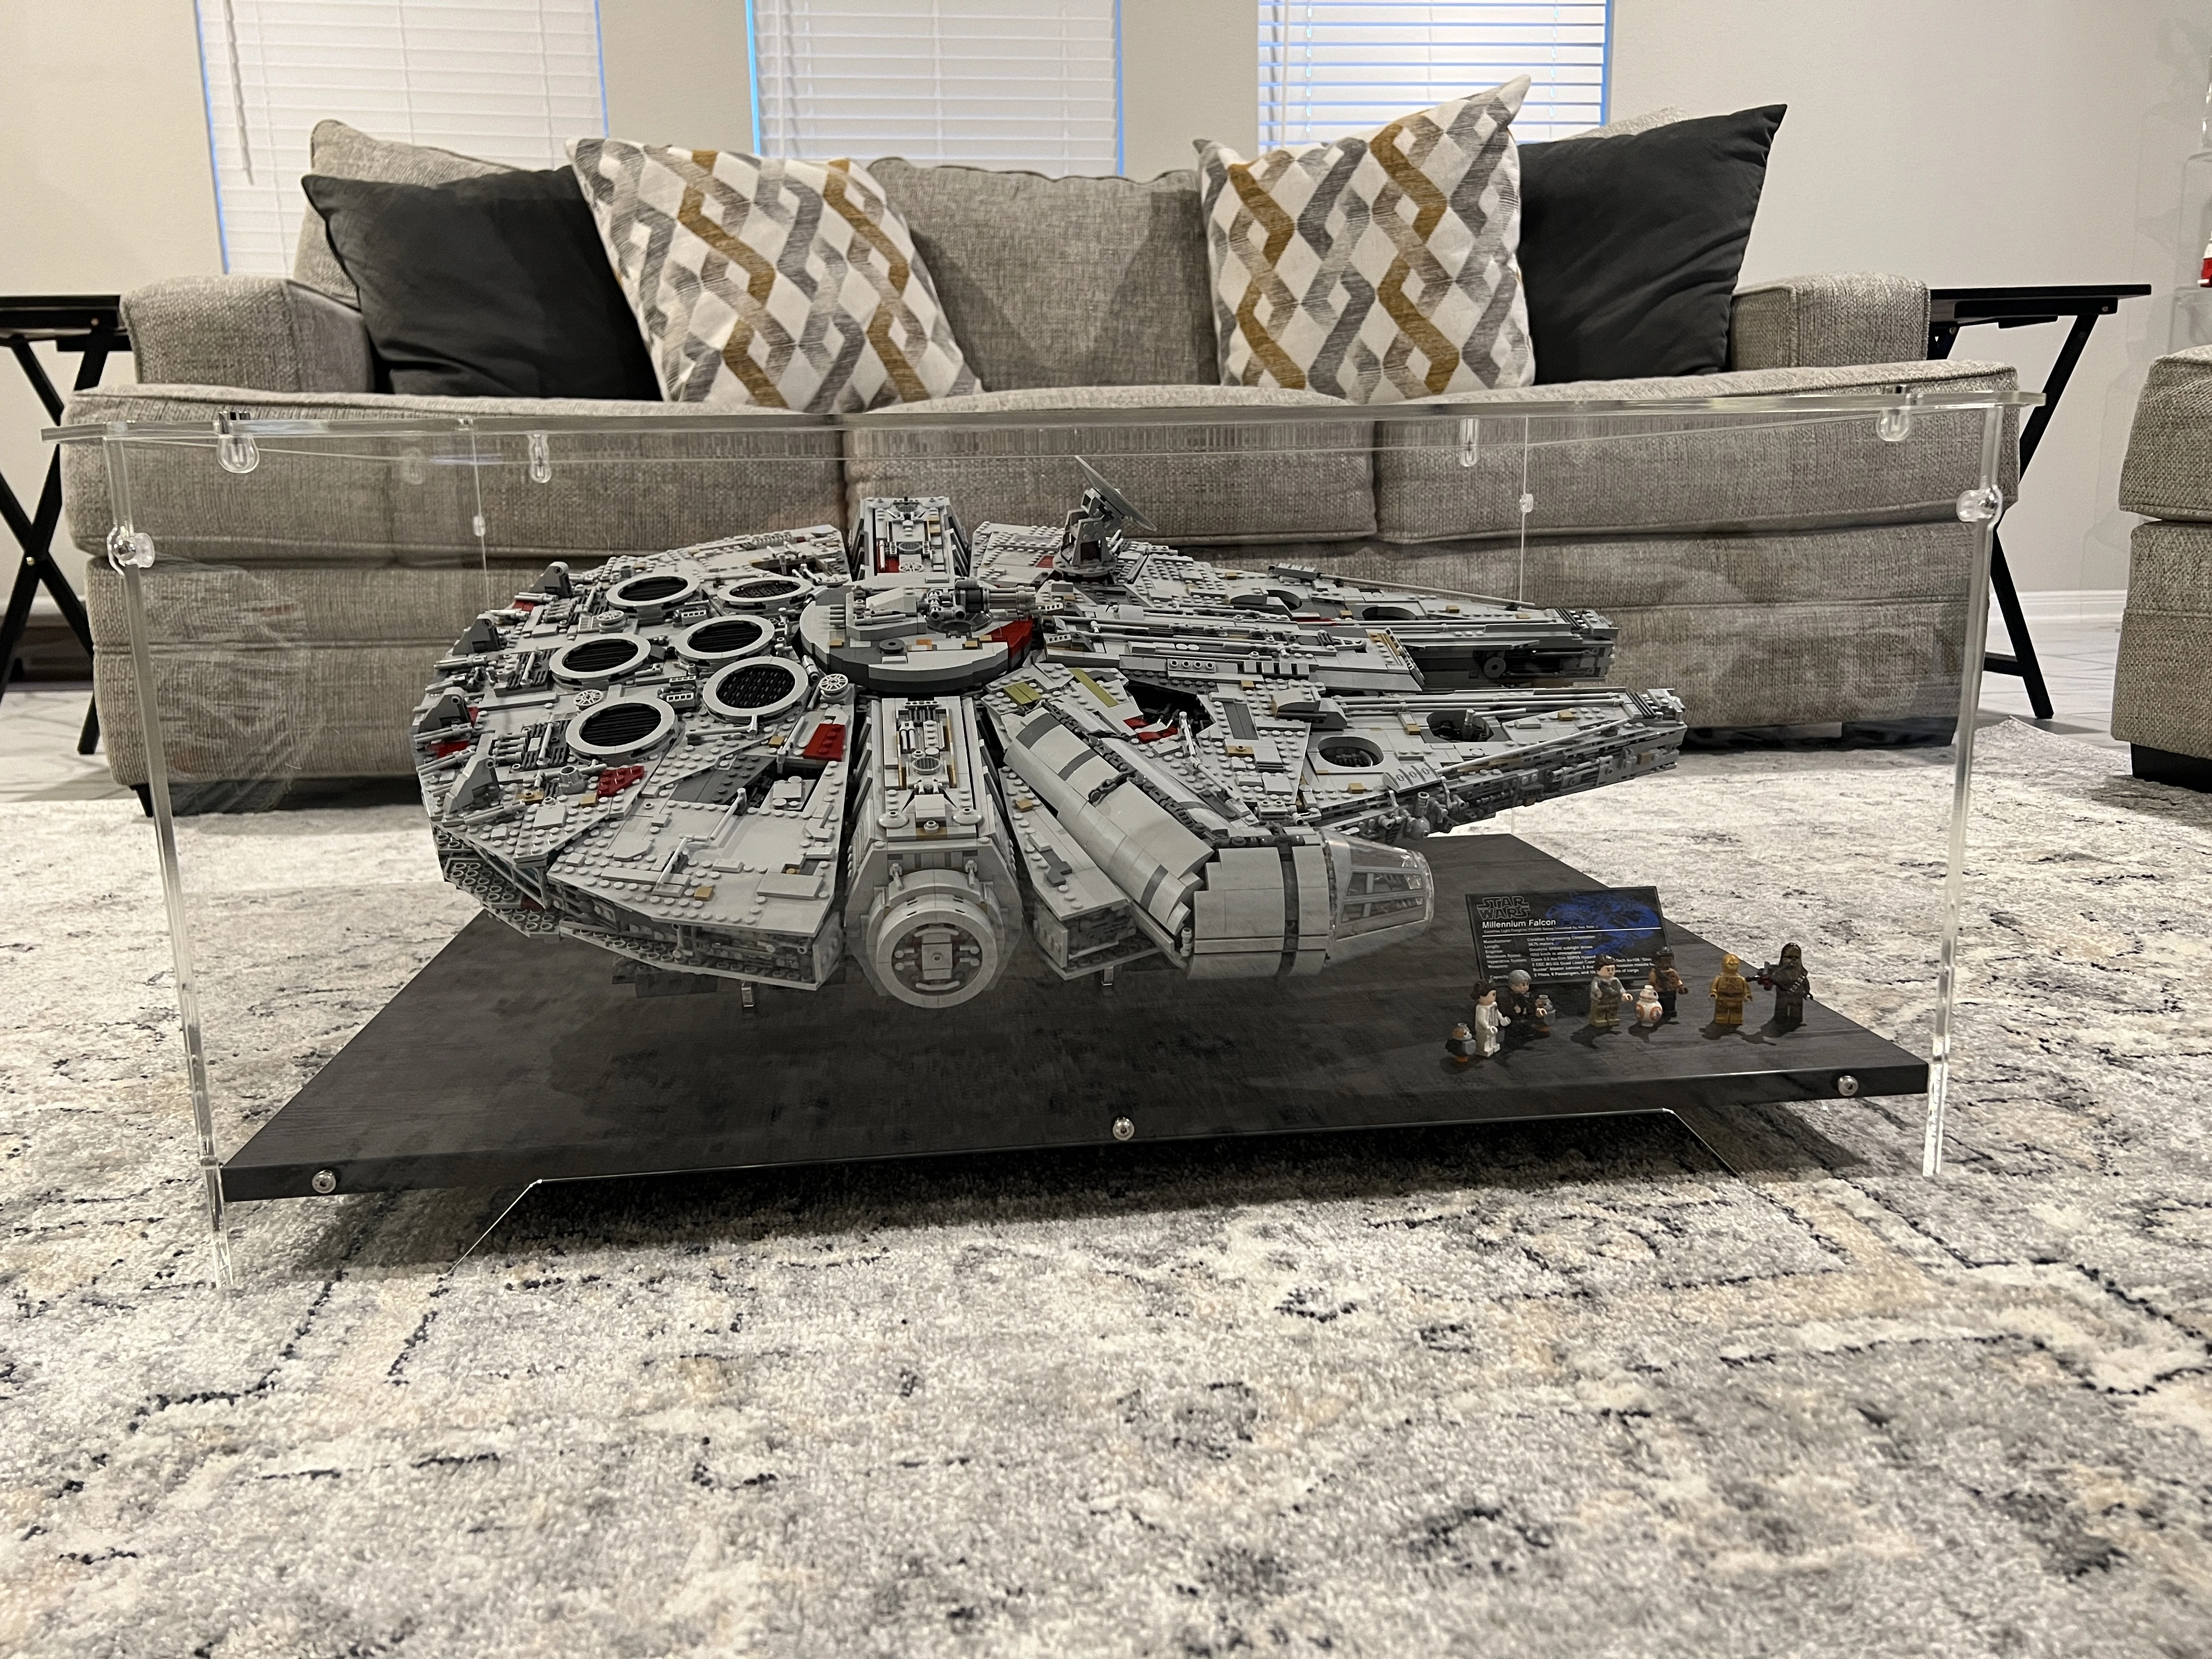 Star Wars Coffee Table